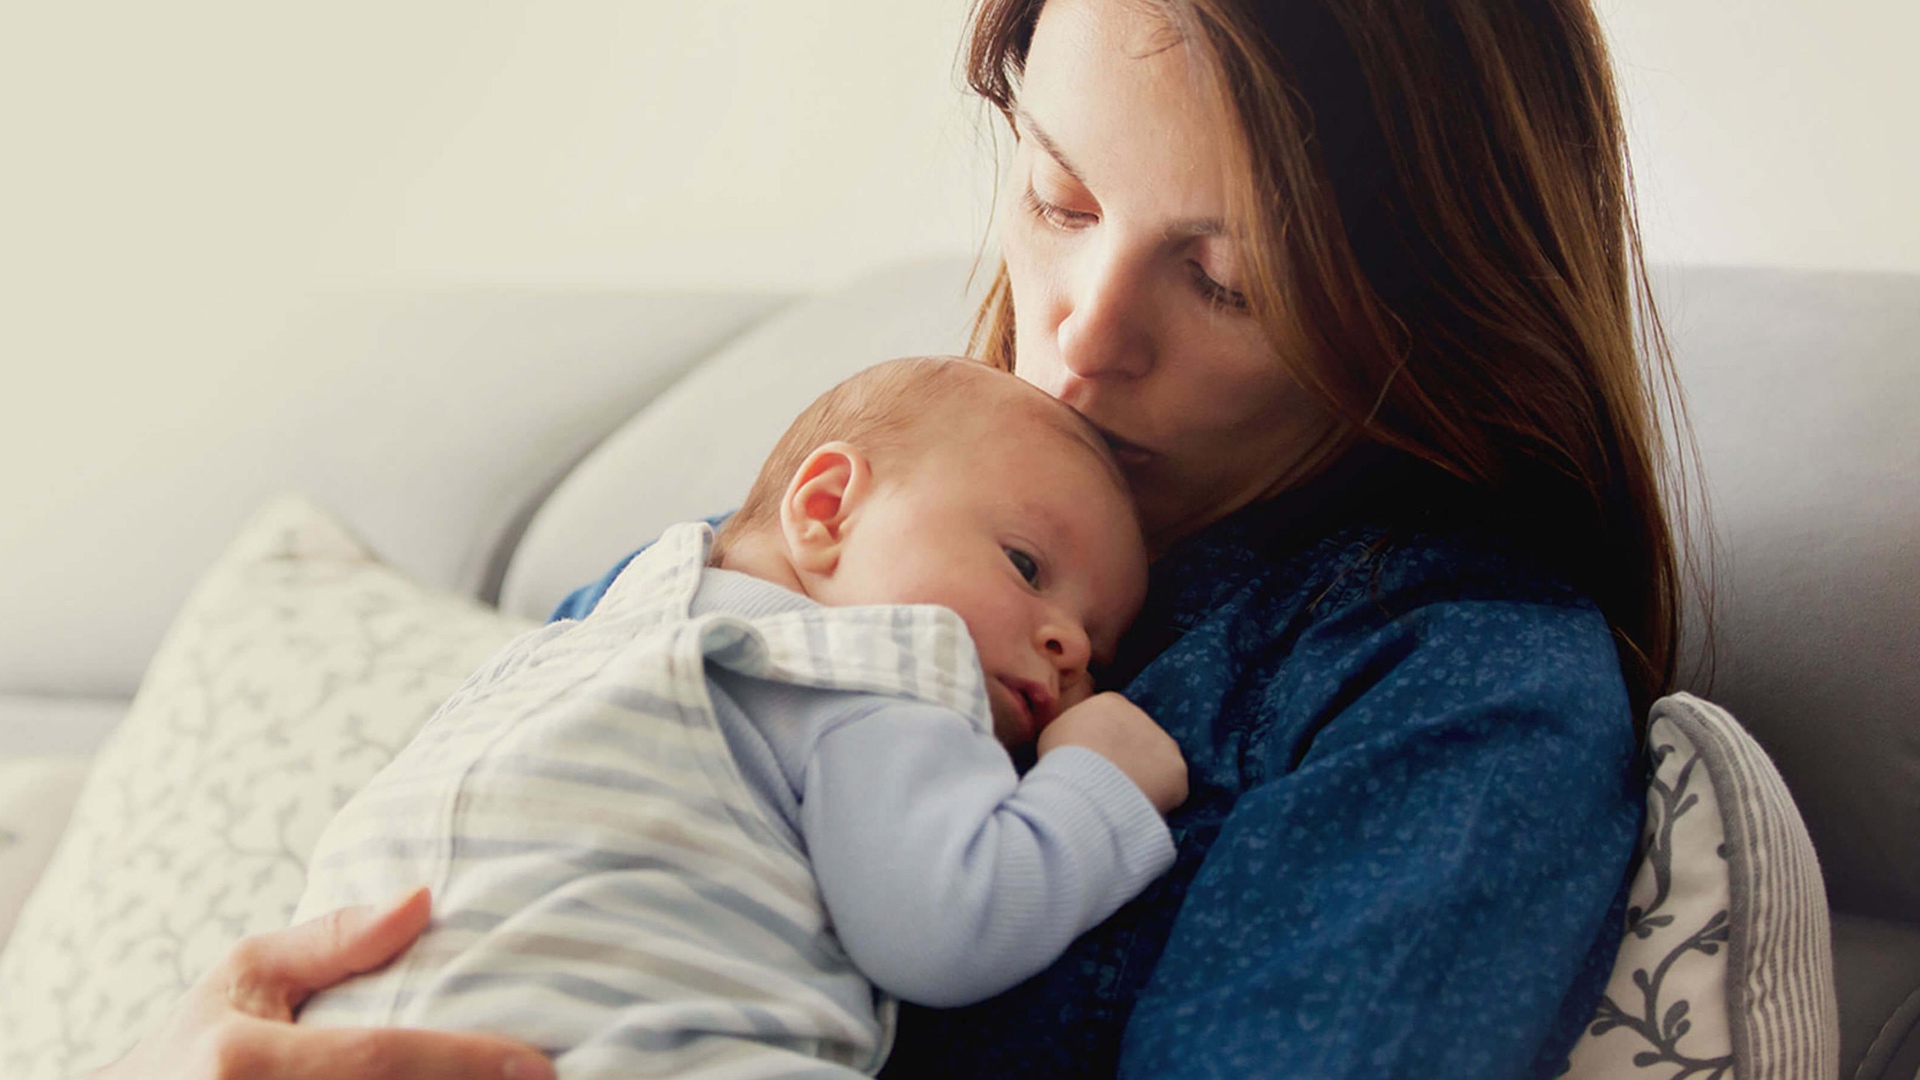 Postpartum Recovery Essentials: A Checklist for Natural Mamas